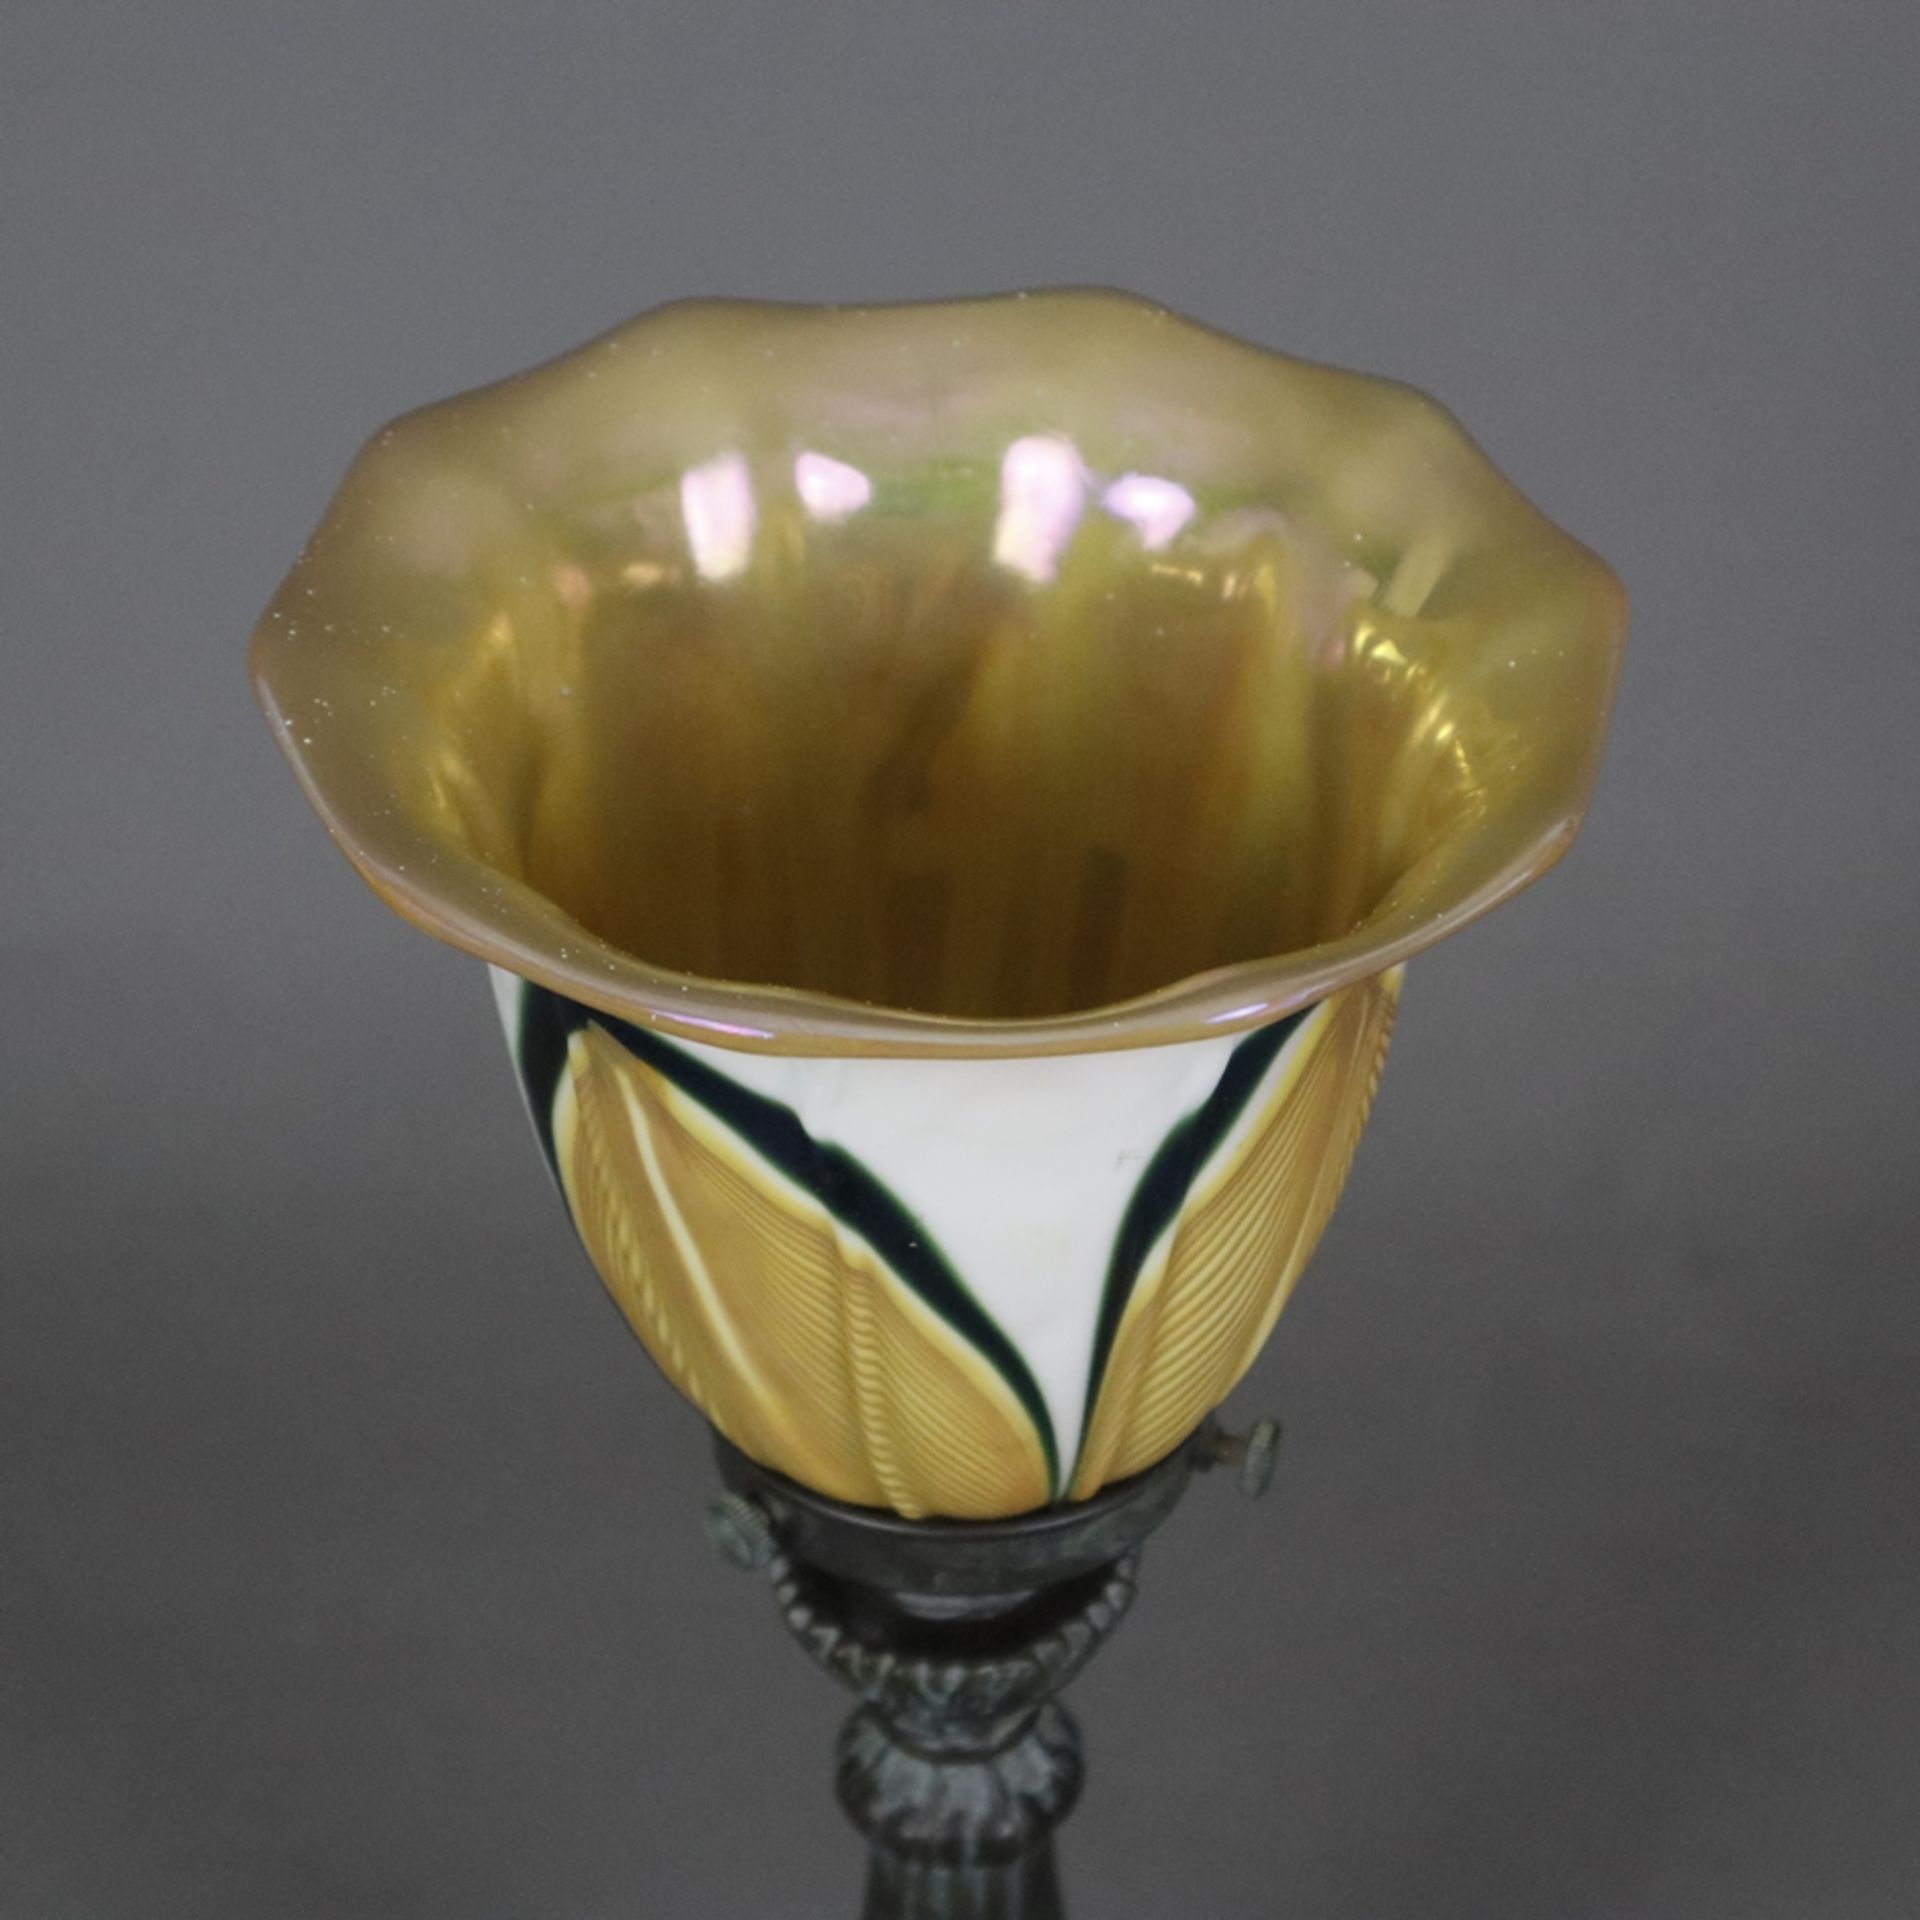 Jugendstil Tischlampe - um 1900/10, floral reliefierter Metallfuß, bronziert, glockenförmiger Glass - Image 2 of 7